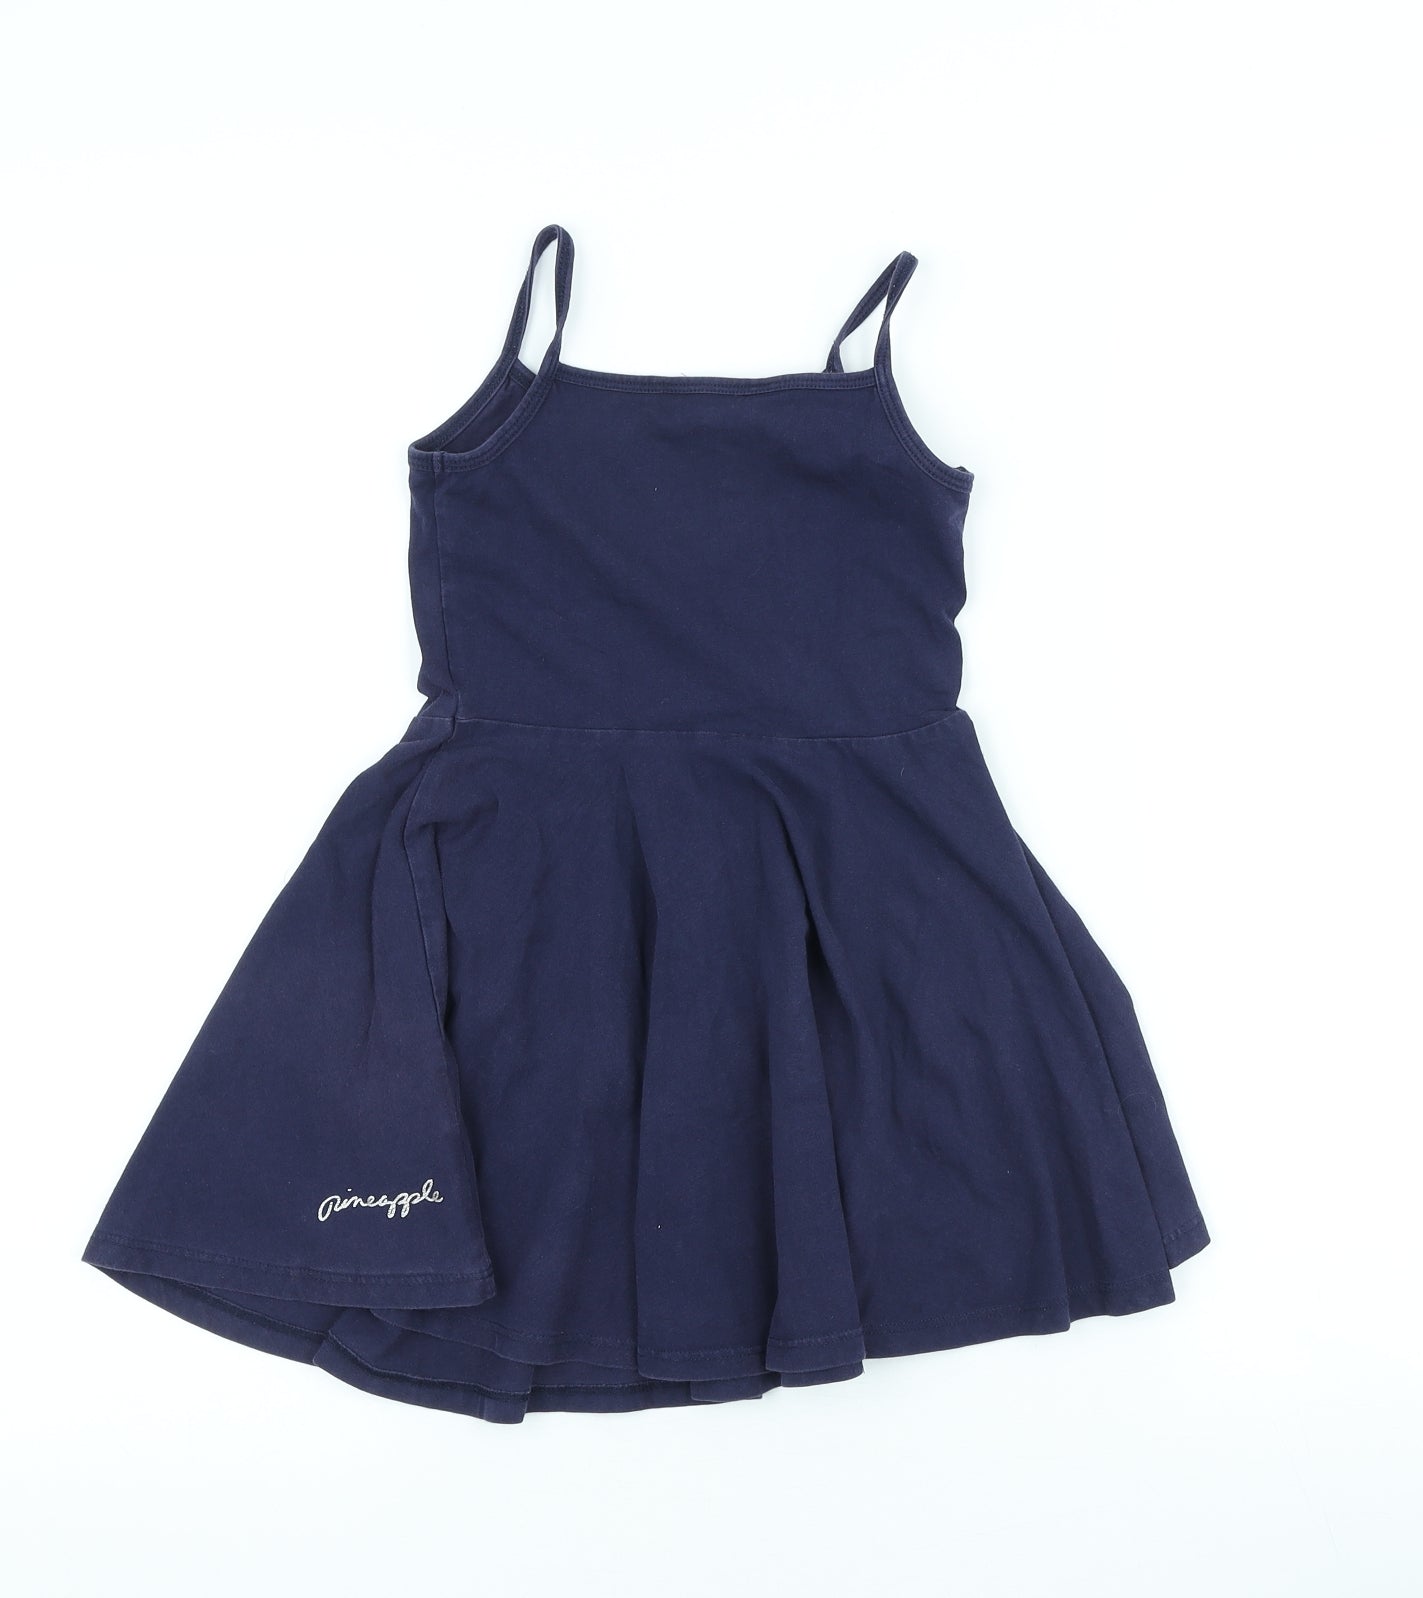 Pineapple Girls Blue Cotton Skater Dress Size 5-6 Years Scoop Neck